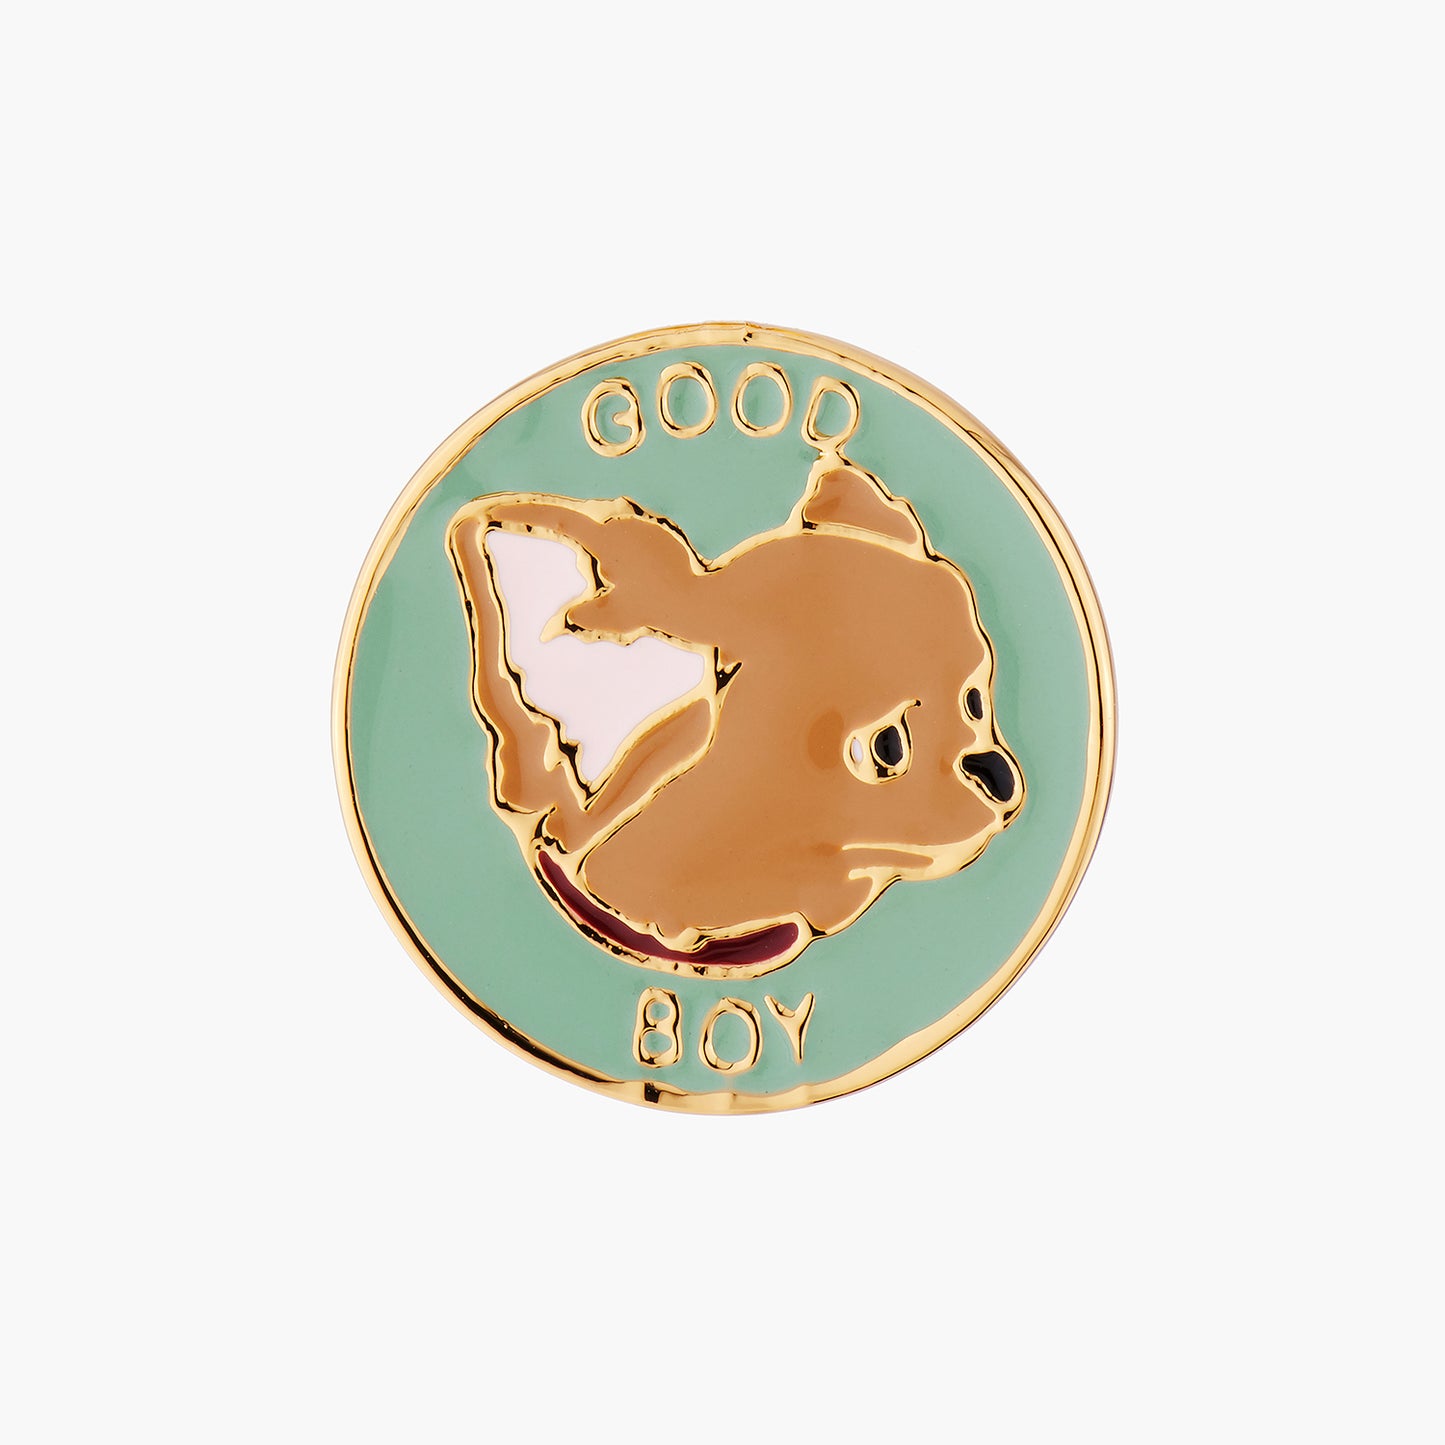 Chihuahua Good Boy Pin's Accessories | AMNA5031